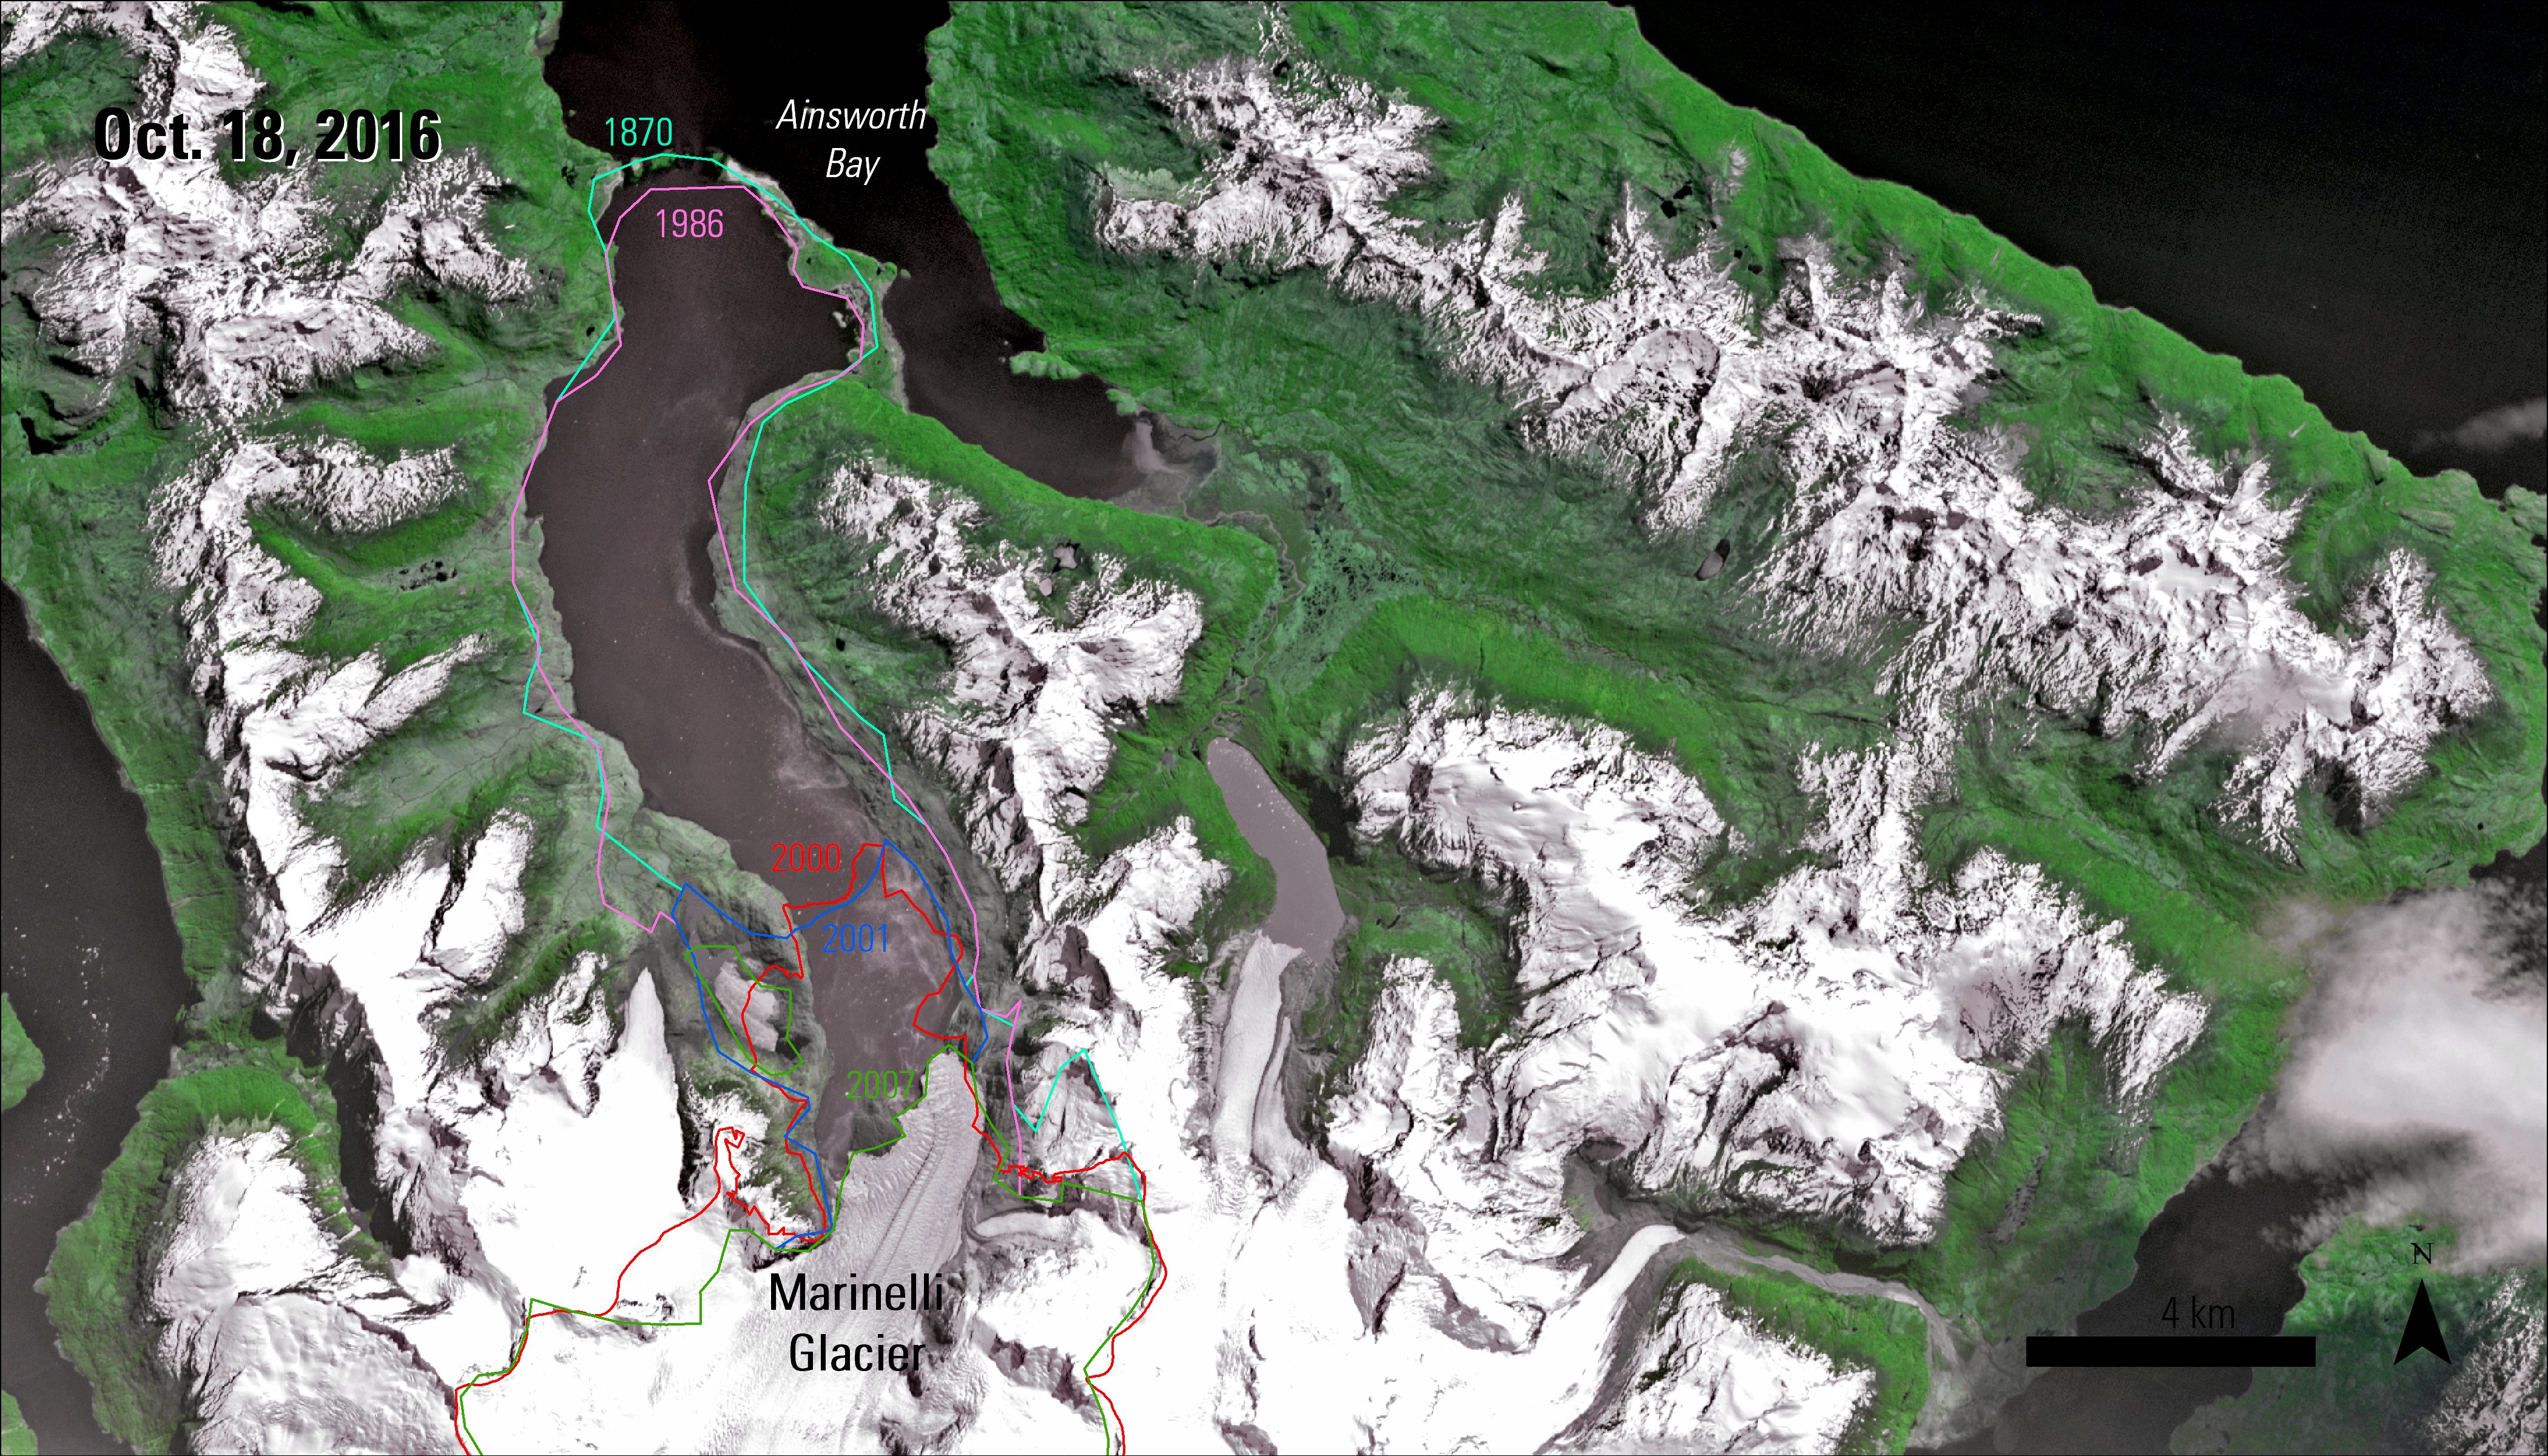 ASTER L1T natural color composite over the Marinelli Glacier, Chile, taken on October 18, 2016.